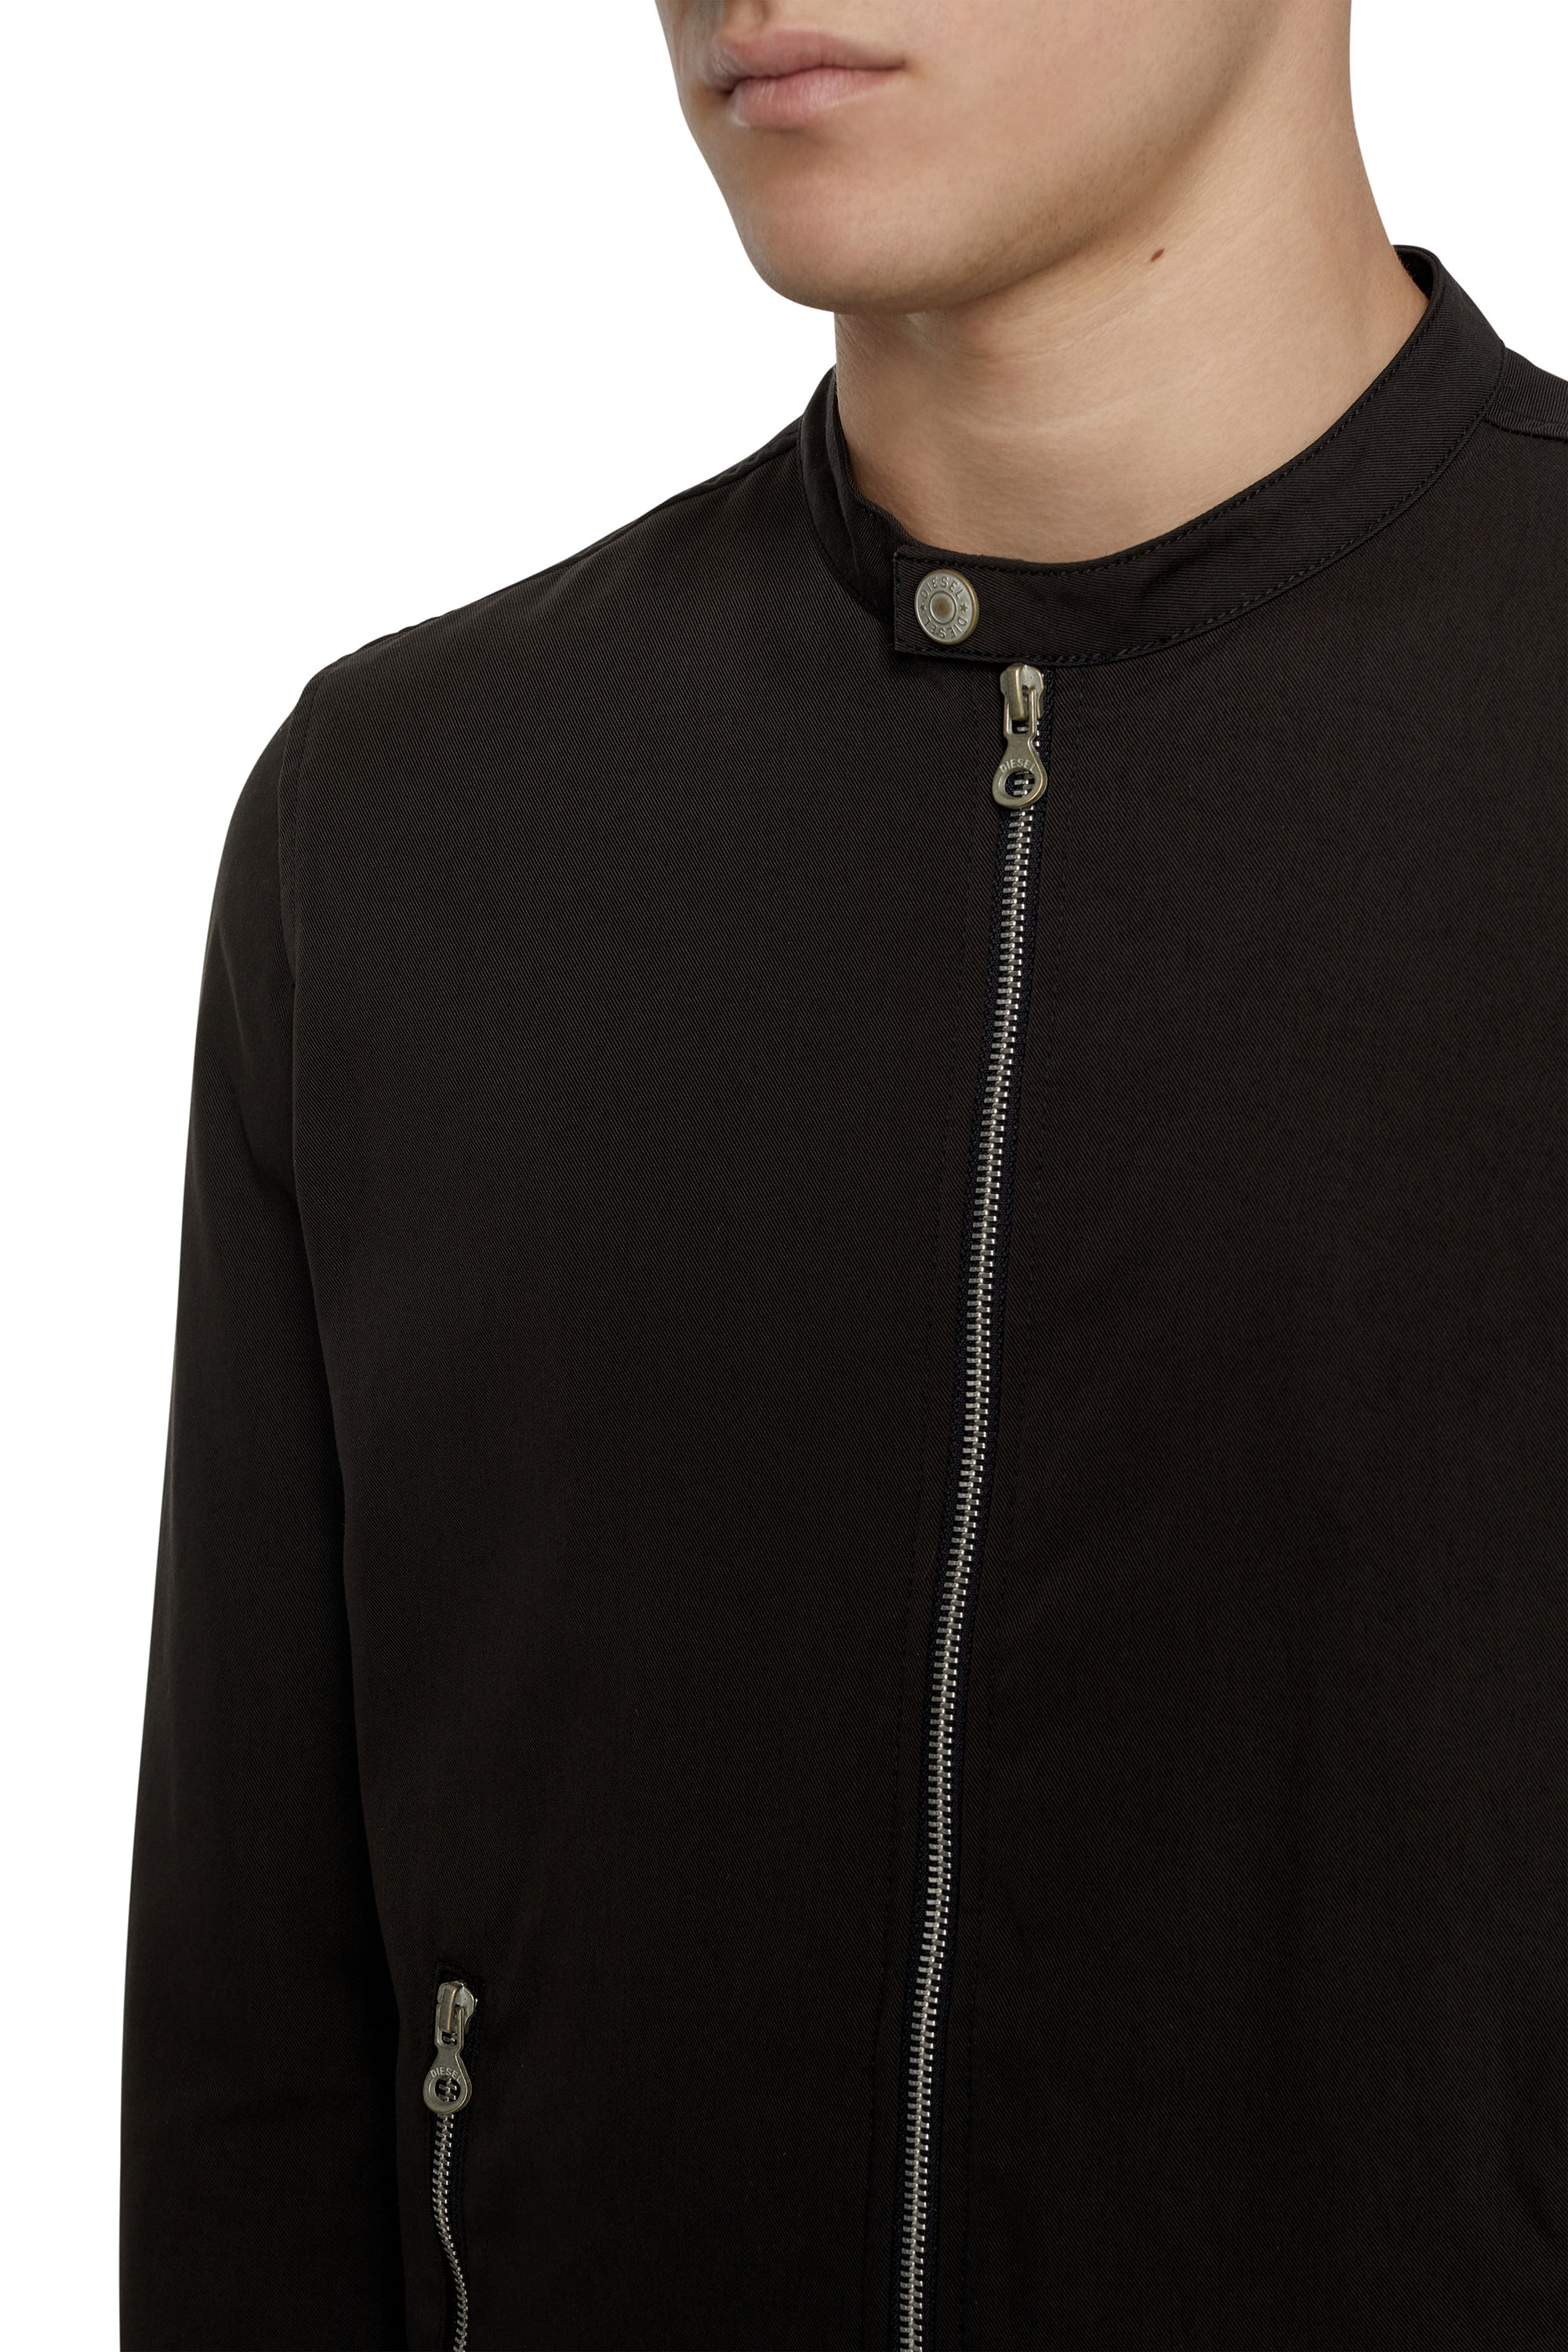 Diesel - J-GLORY-NW, Man Biker jacket in cotton-touch nylon in Black - Image 5